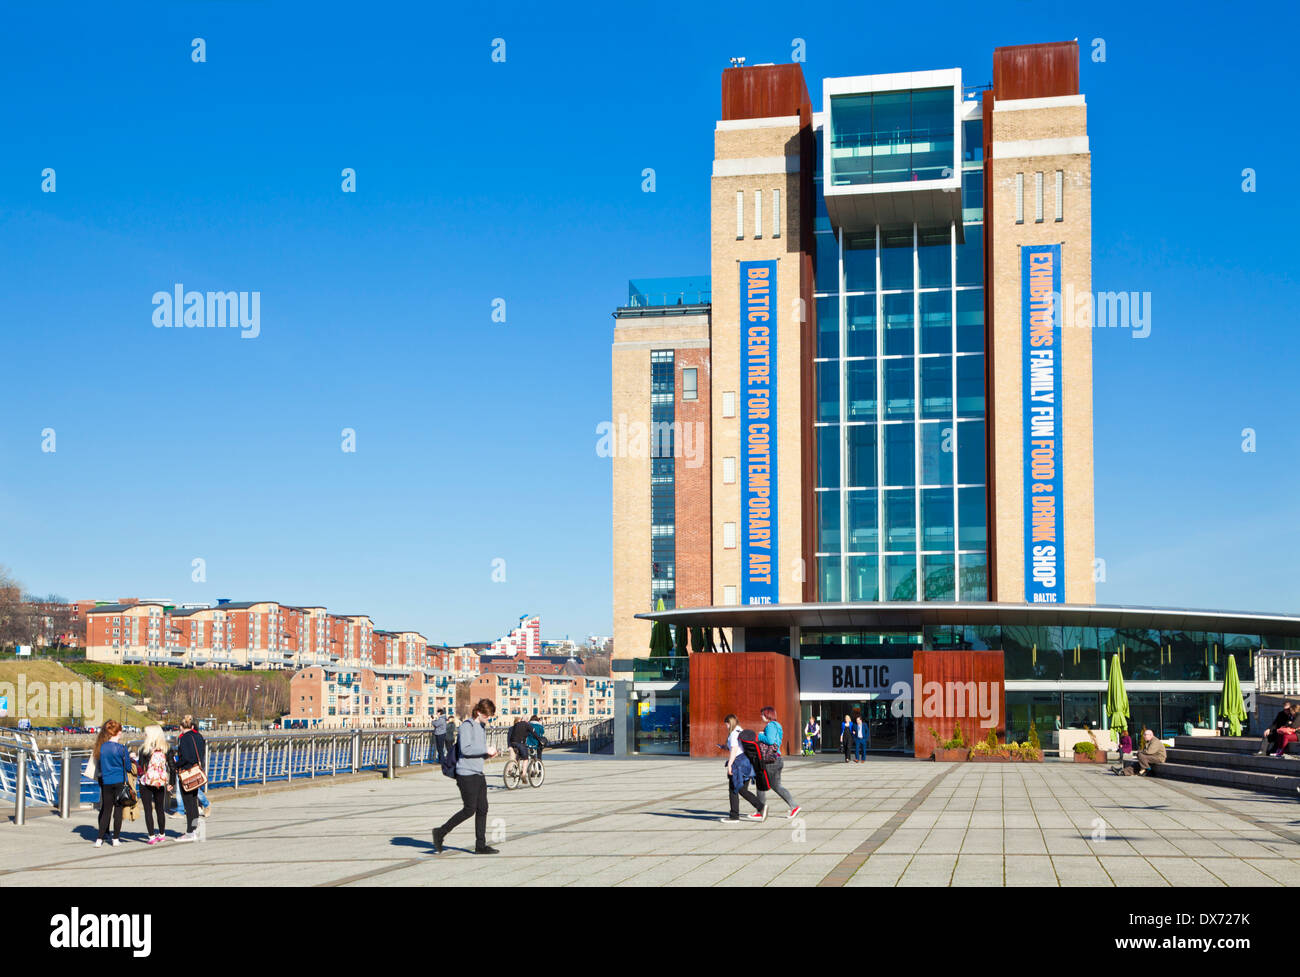 baltic centre for contemporary art Gateshead Quays Newcastle upon Tyne Tyne and Wear Tyneside England UK GB EU Europe Stock Photo